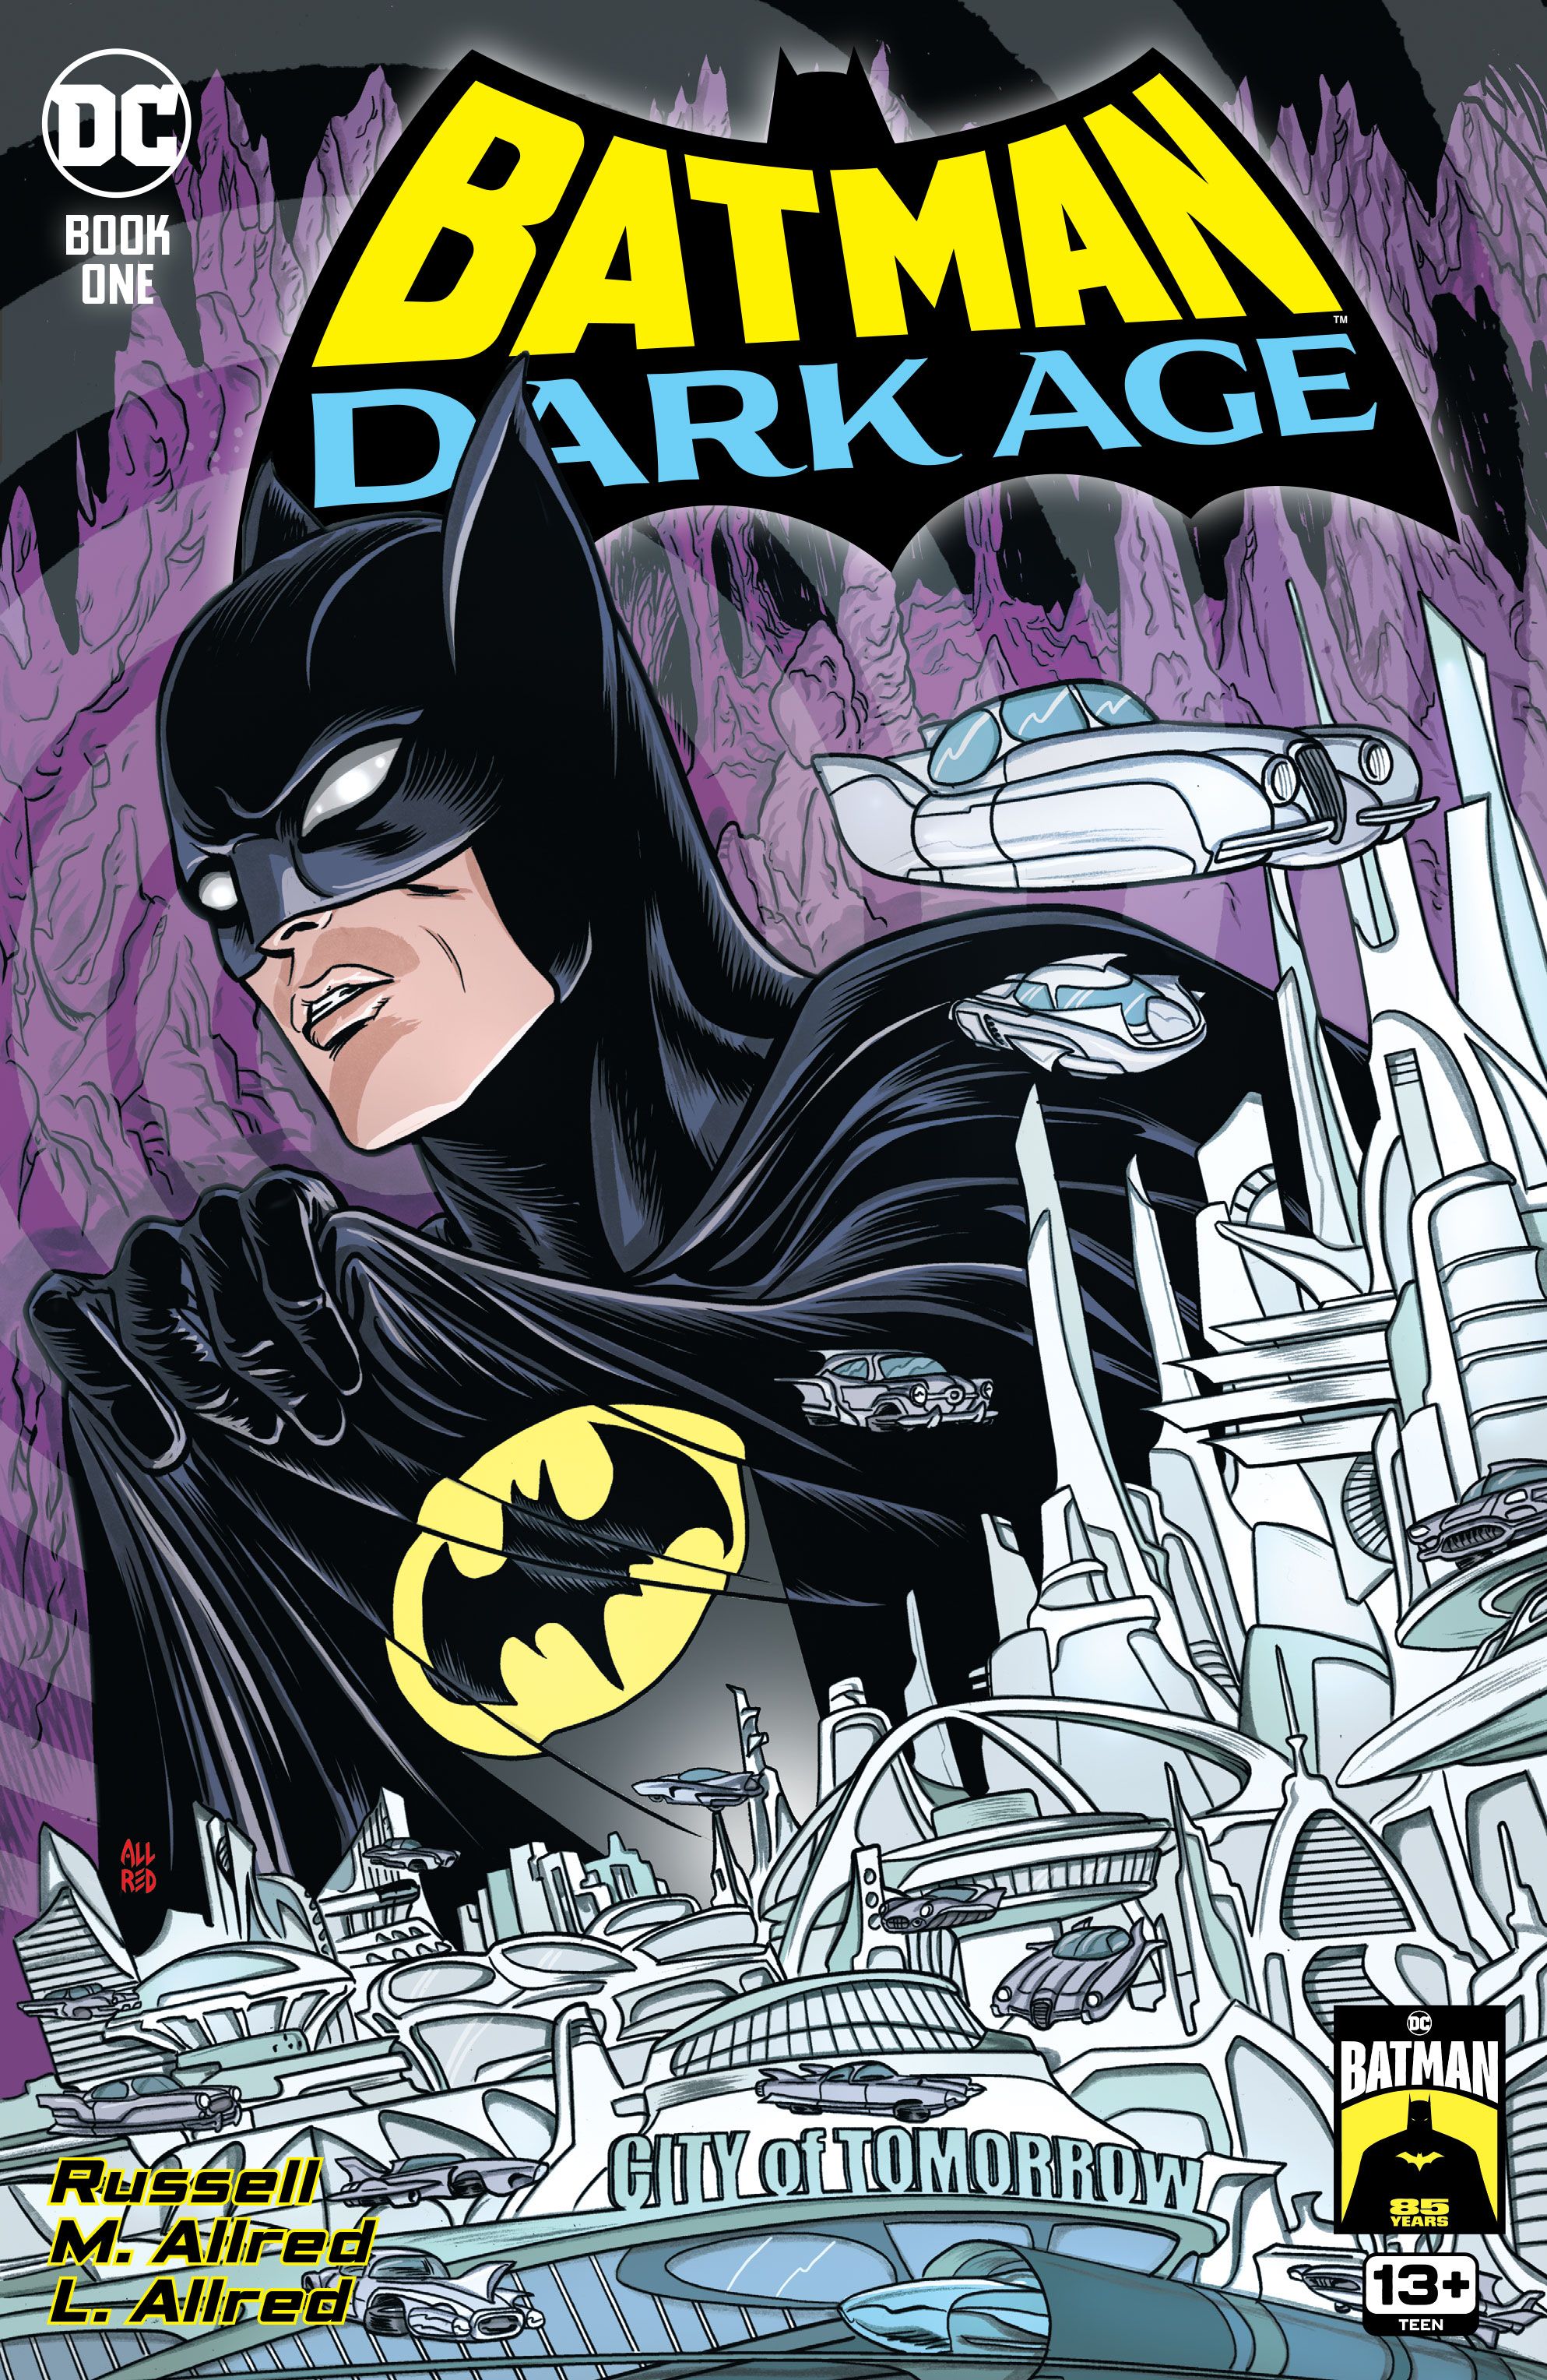 Batman Dark Age #1 cover, Batman looming behind a futuristic model of Gotham.